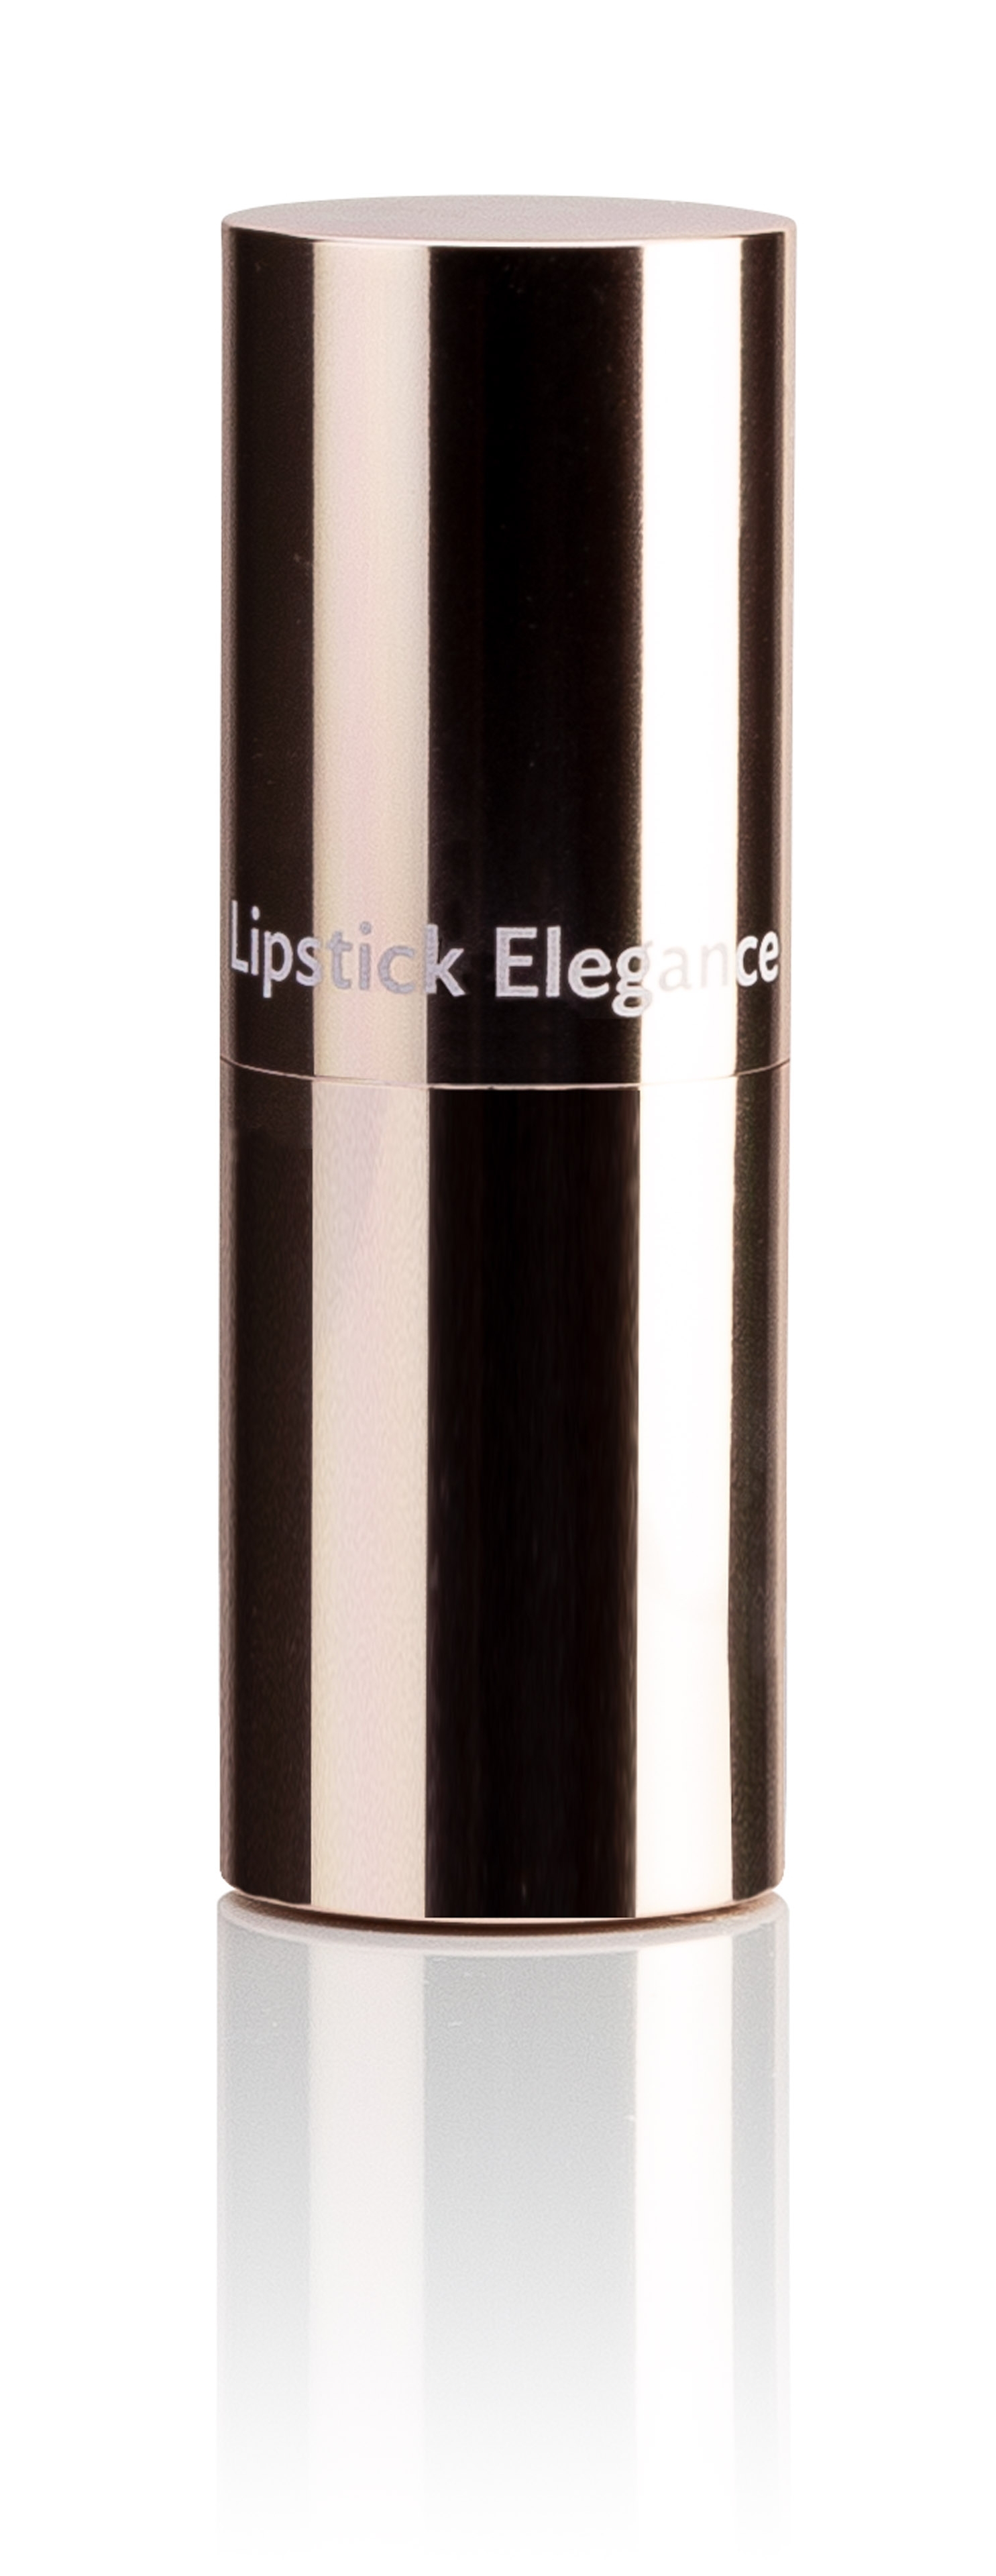 COSART Lipstick Elegance chilli 3018 3,5 g